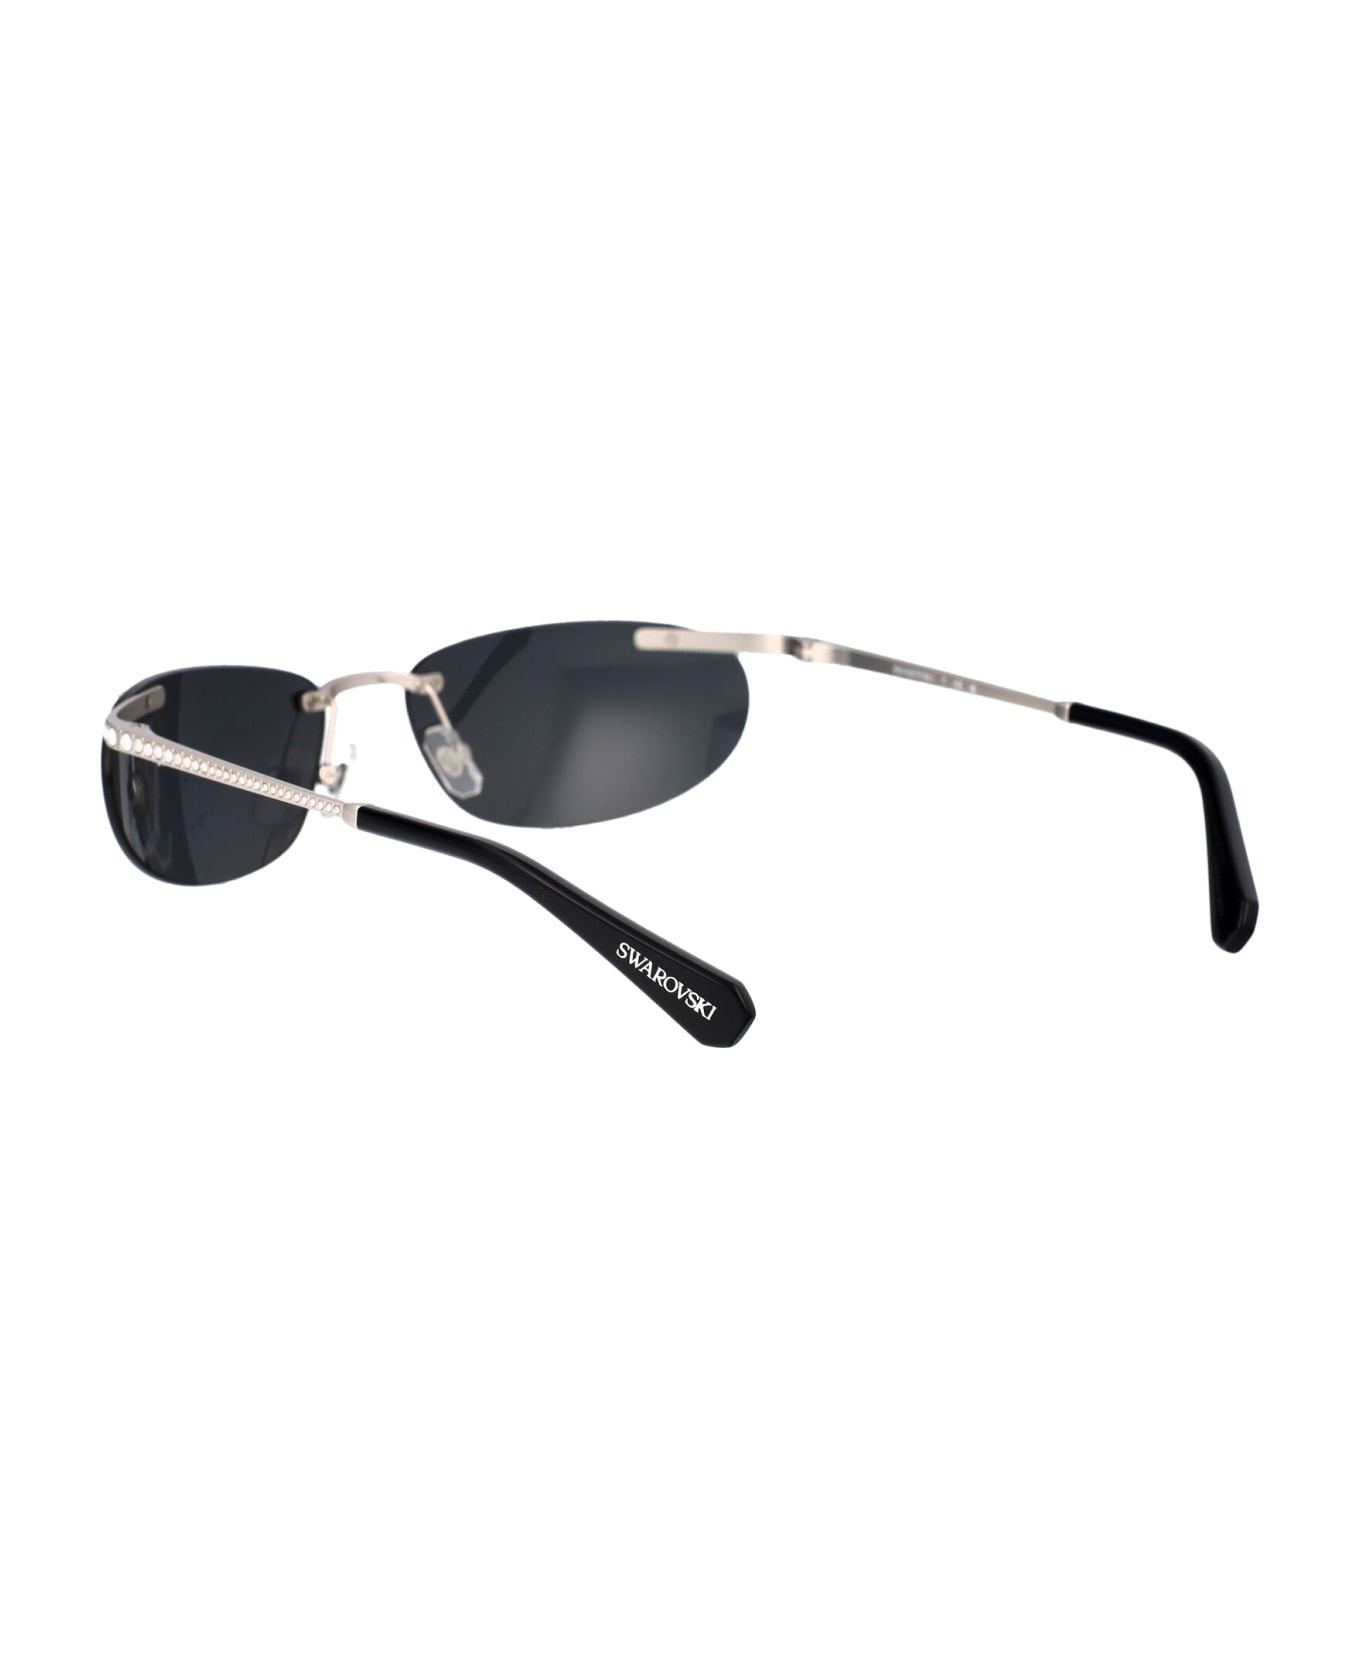 Swarovski 0sk7019 Sunglasses - 400187 Matte Silver